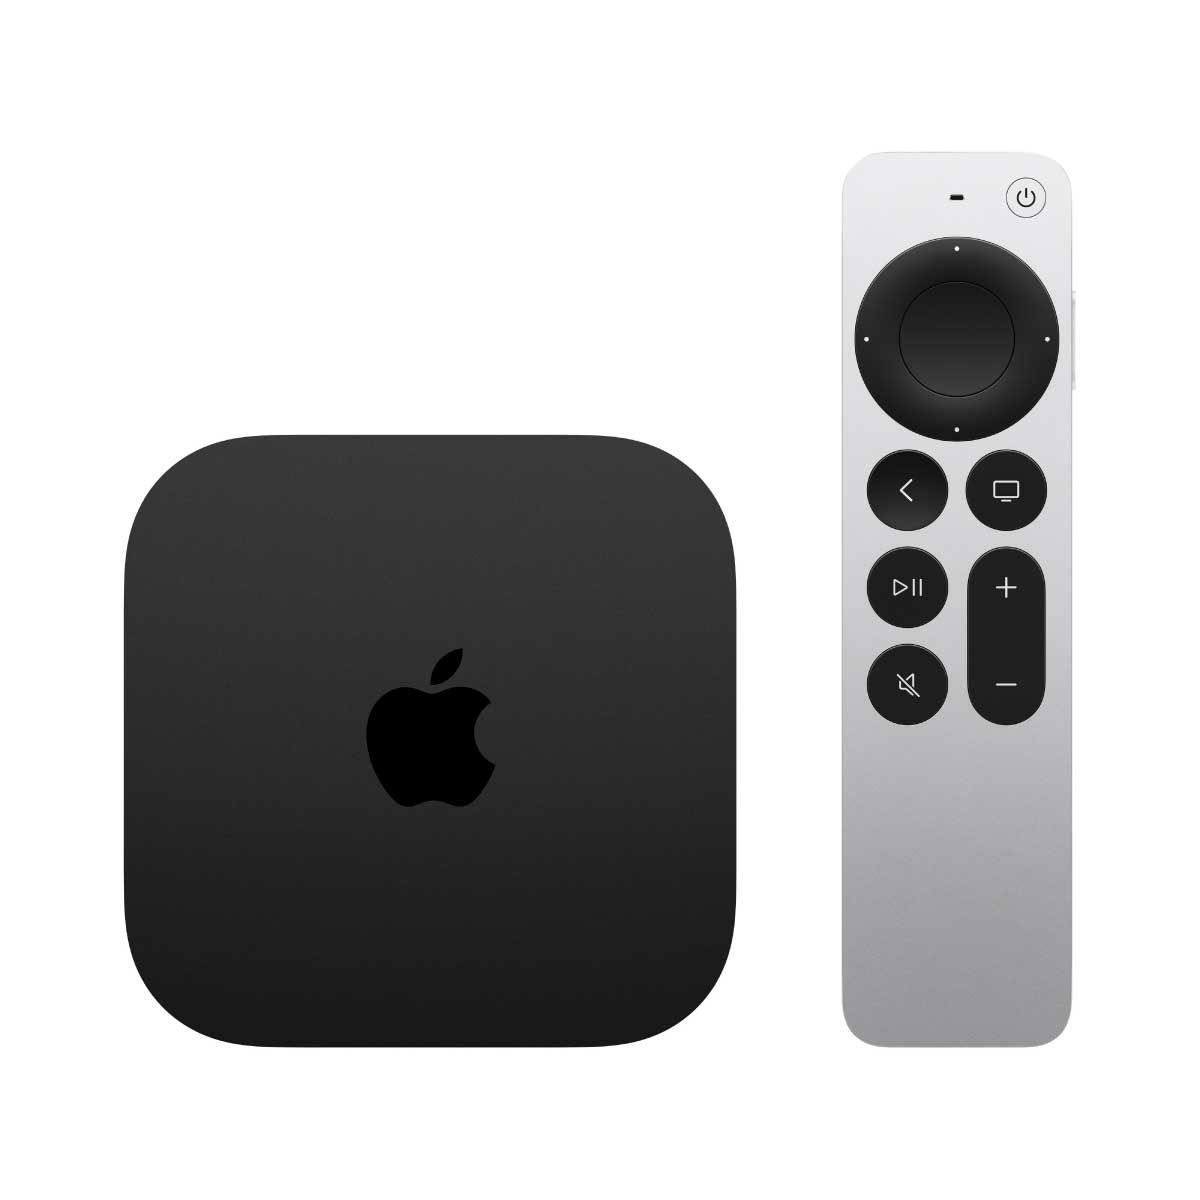 Apple TV 4K รุ่น Wi-Fi